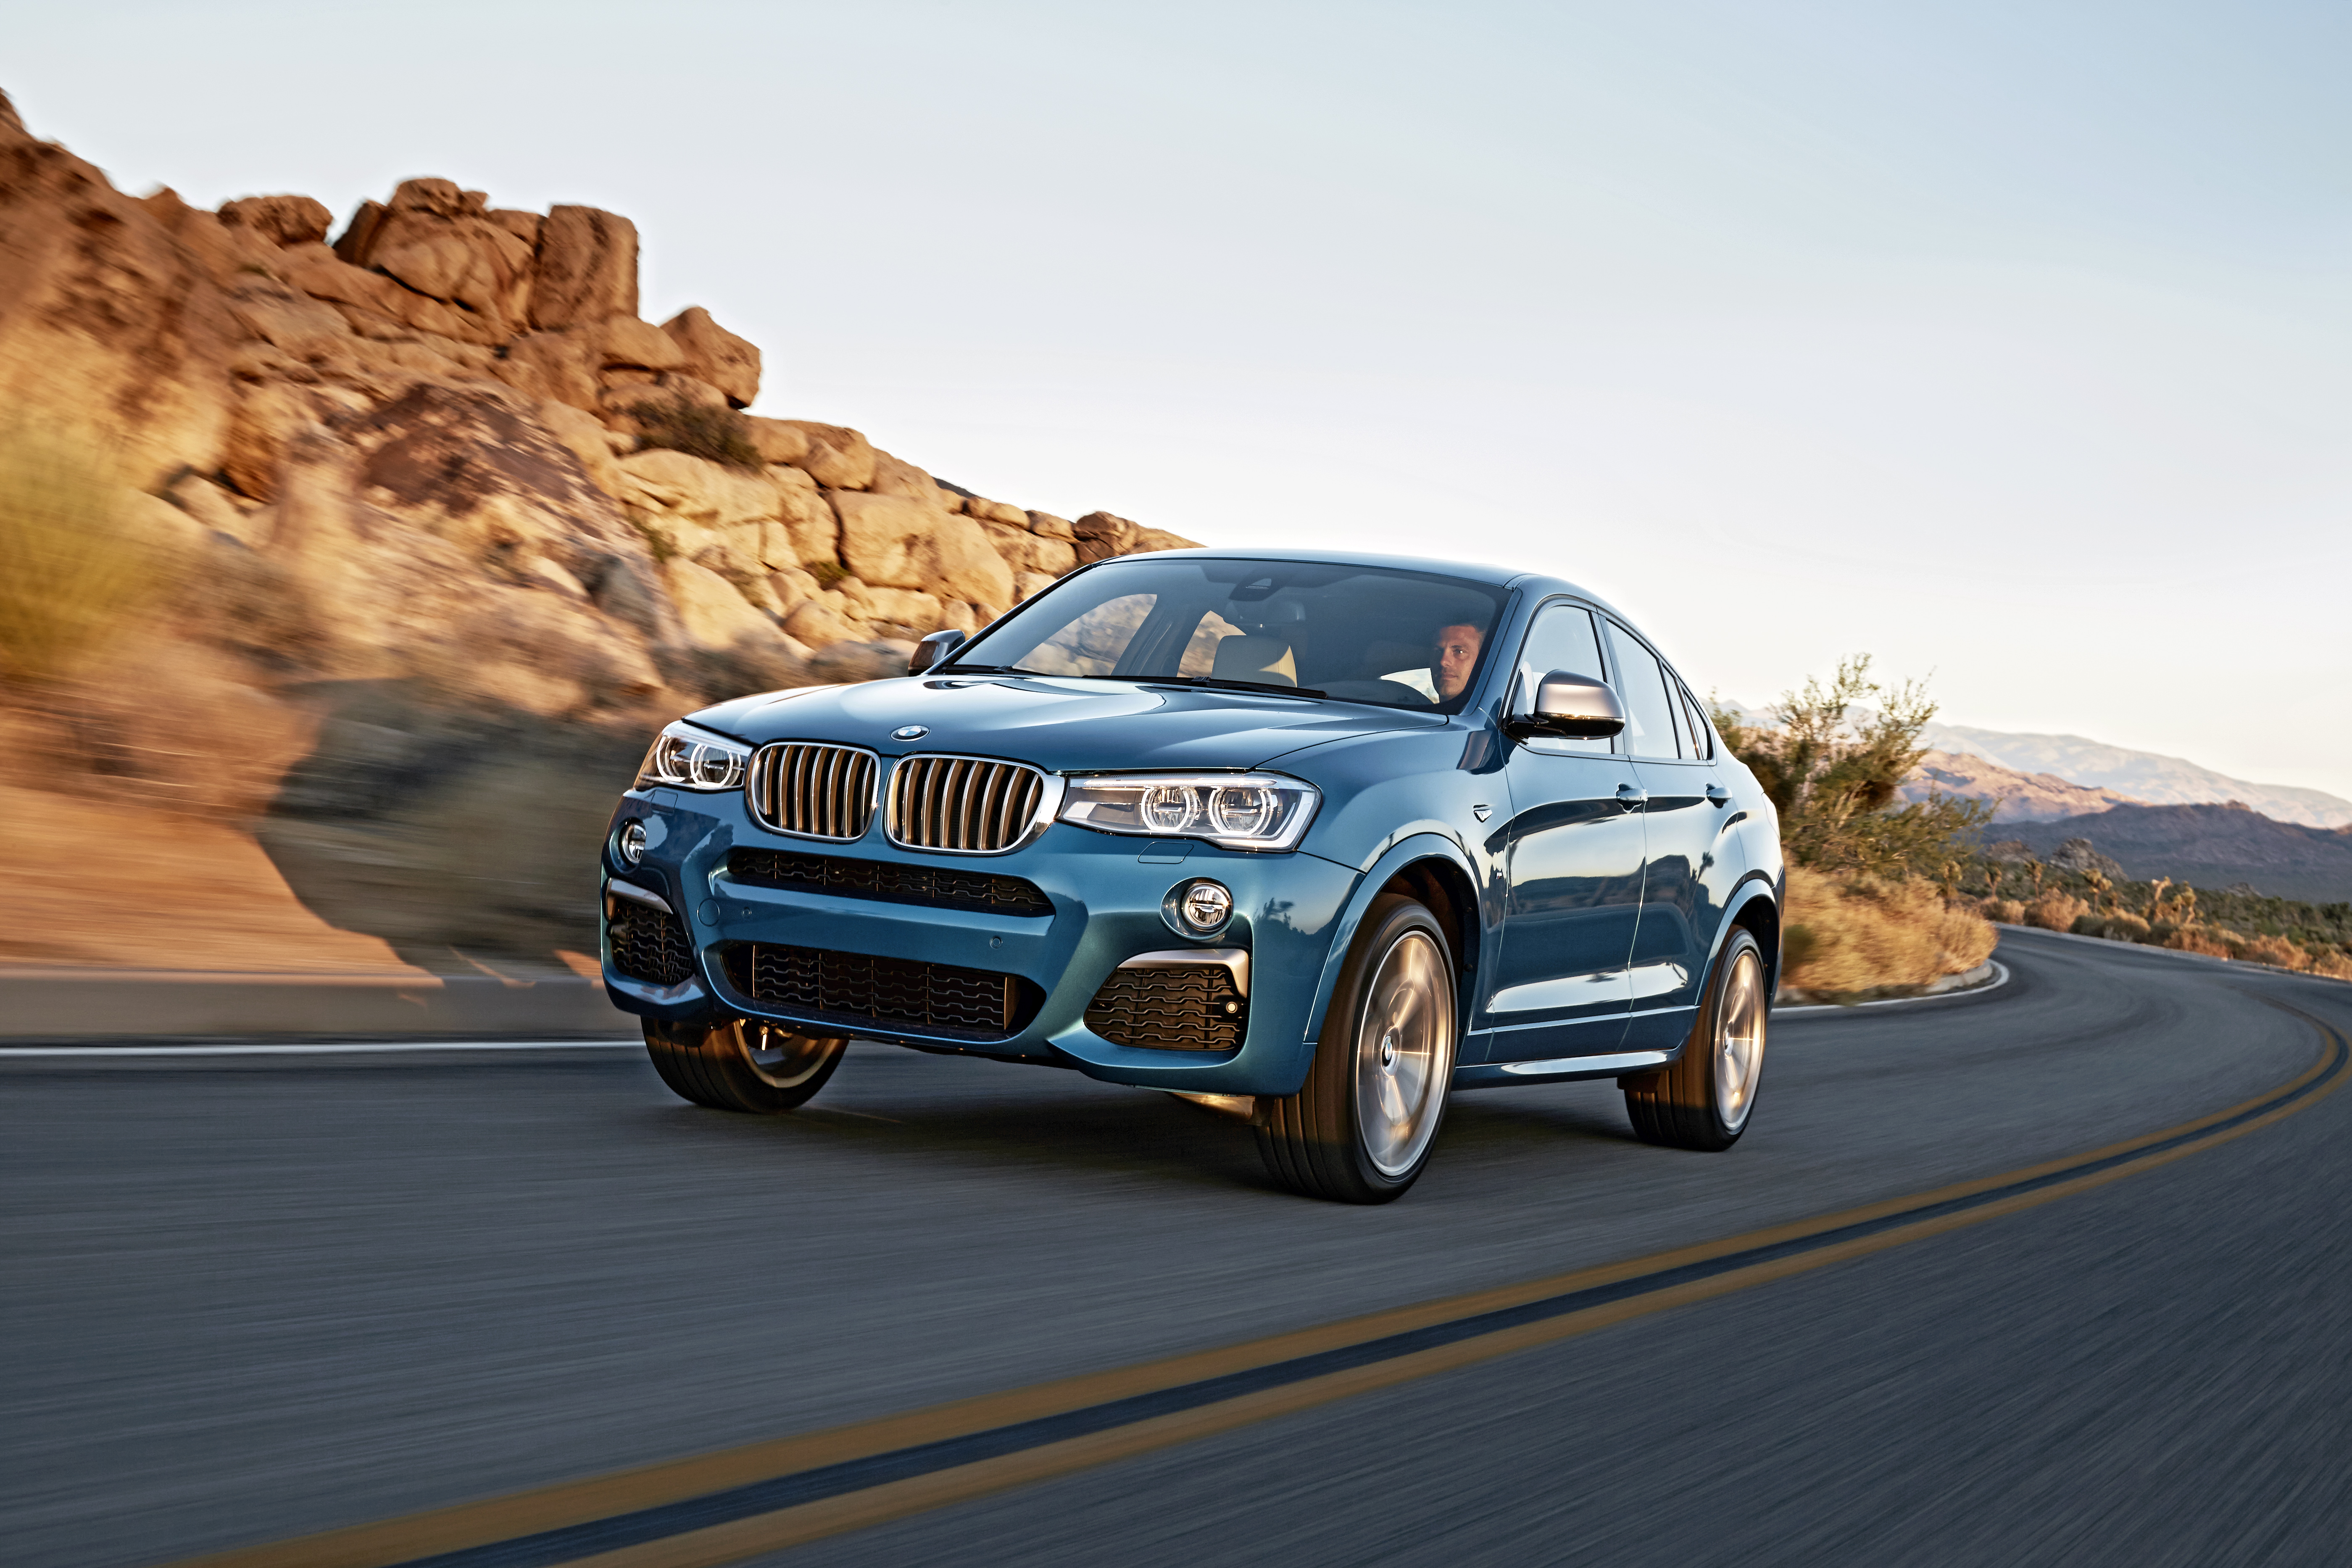 2015 BMW X4 ( F26 ) M40i #434682 - Best quality free high ...